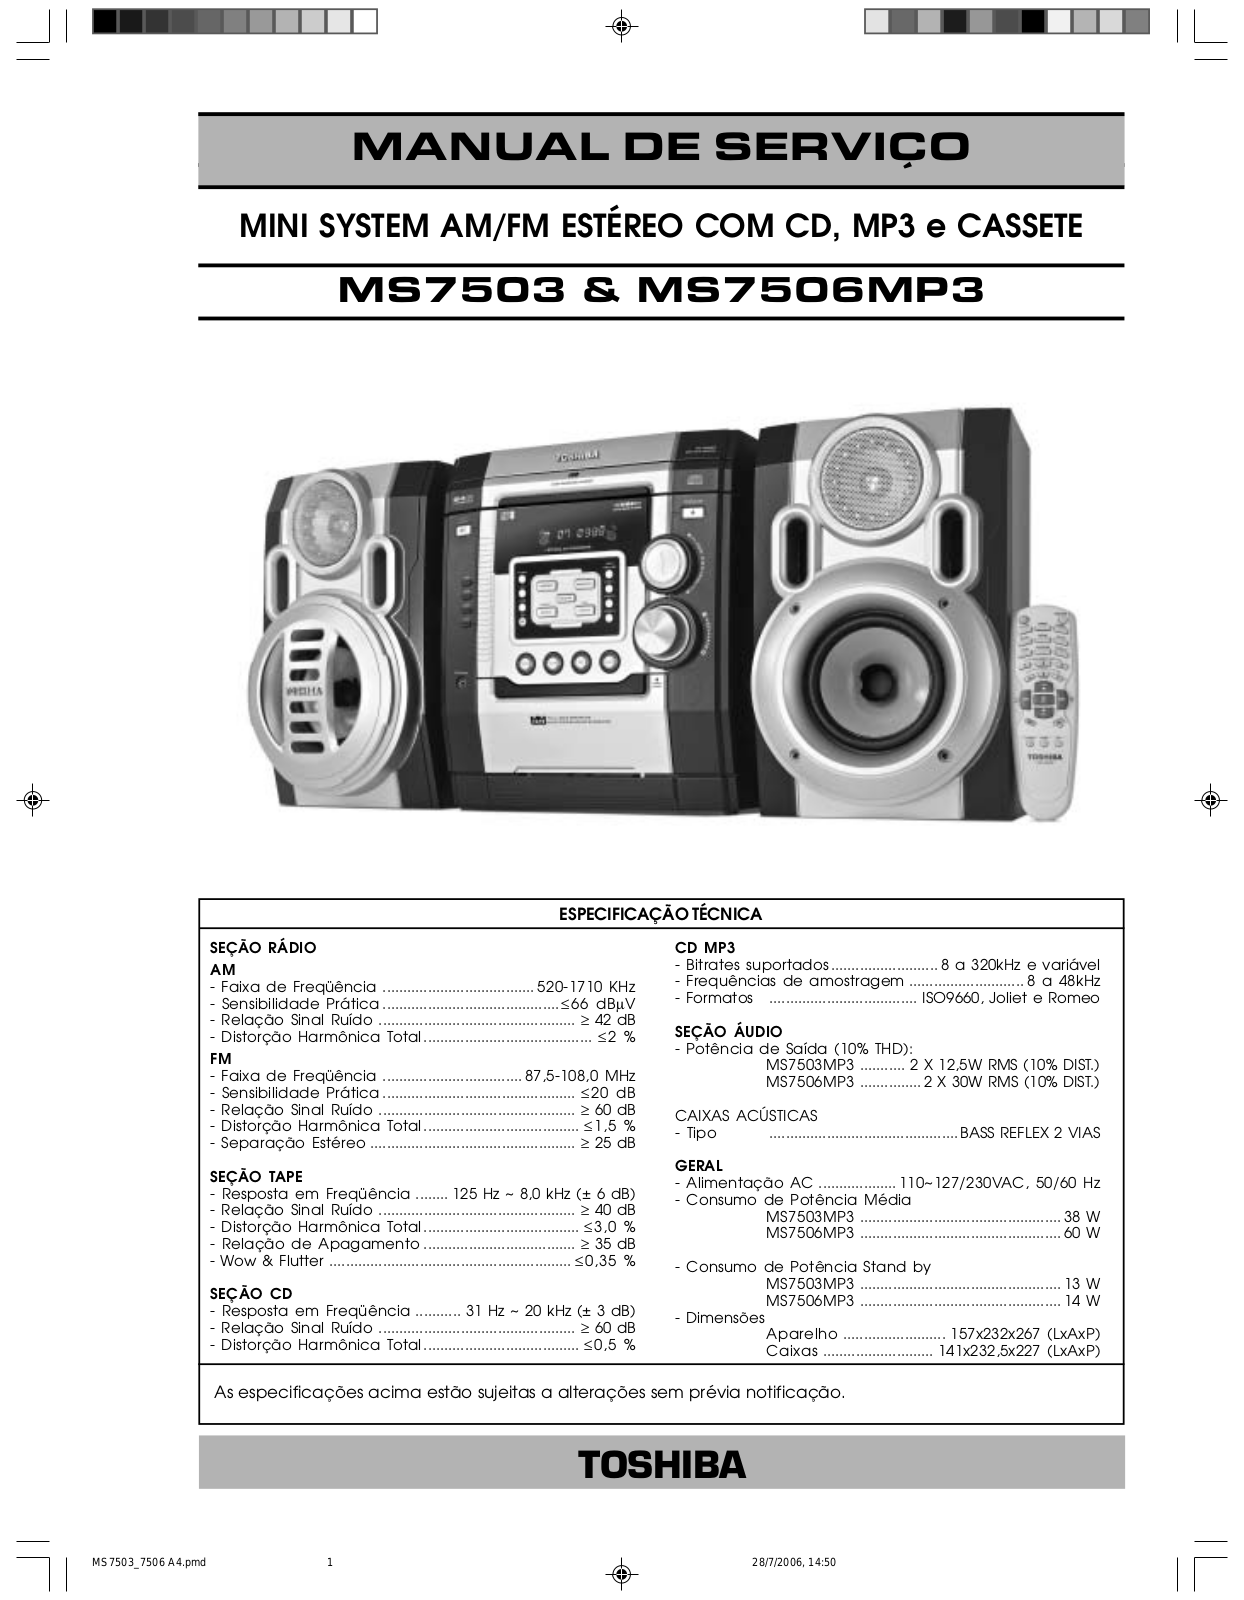 Toshiba MS-7503-MP-3, MS-7506-MP-3 Service manual